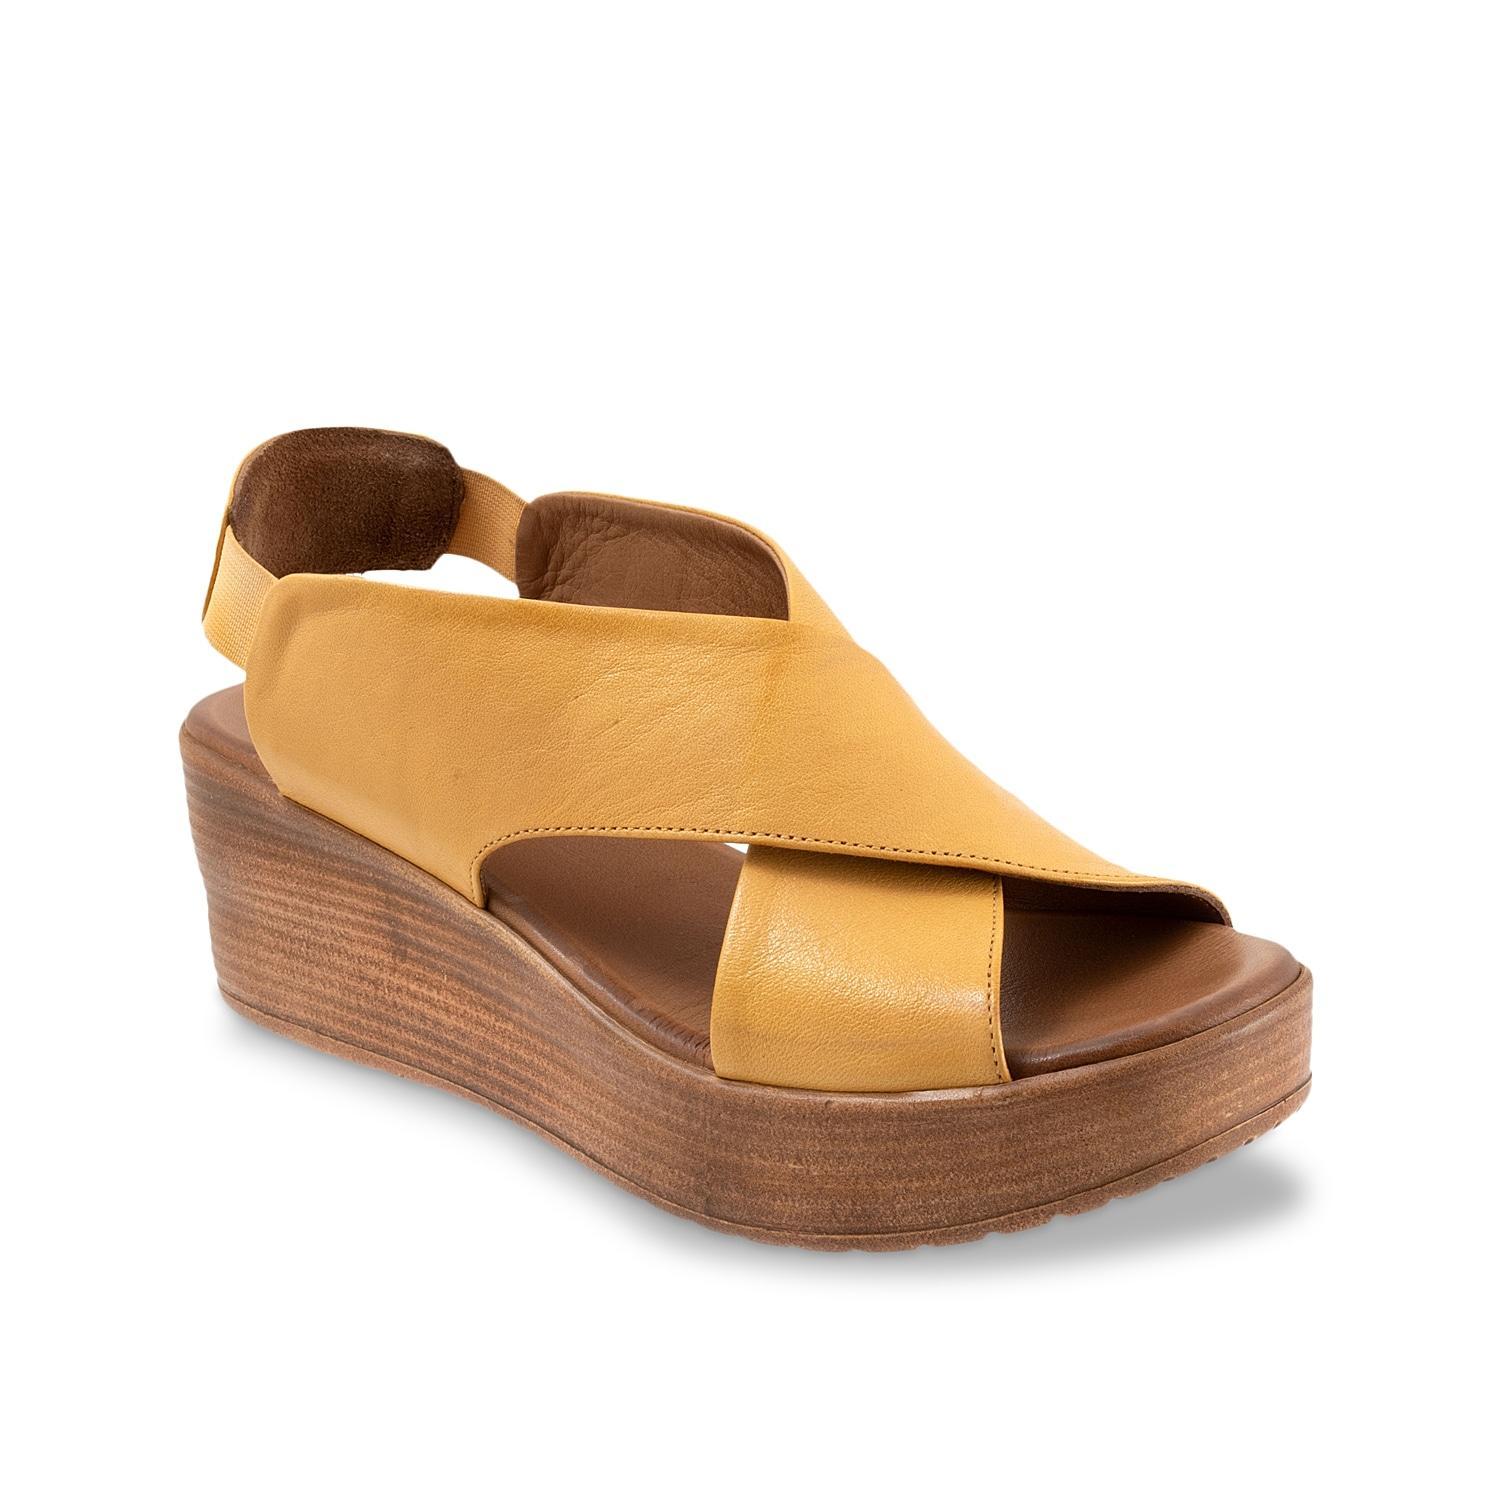 Bueno Naomi Leather Platform Wedge Sandals Product Image